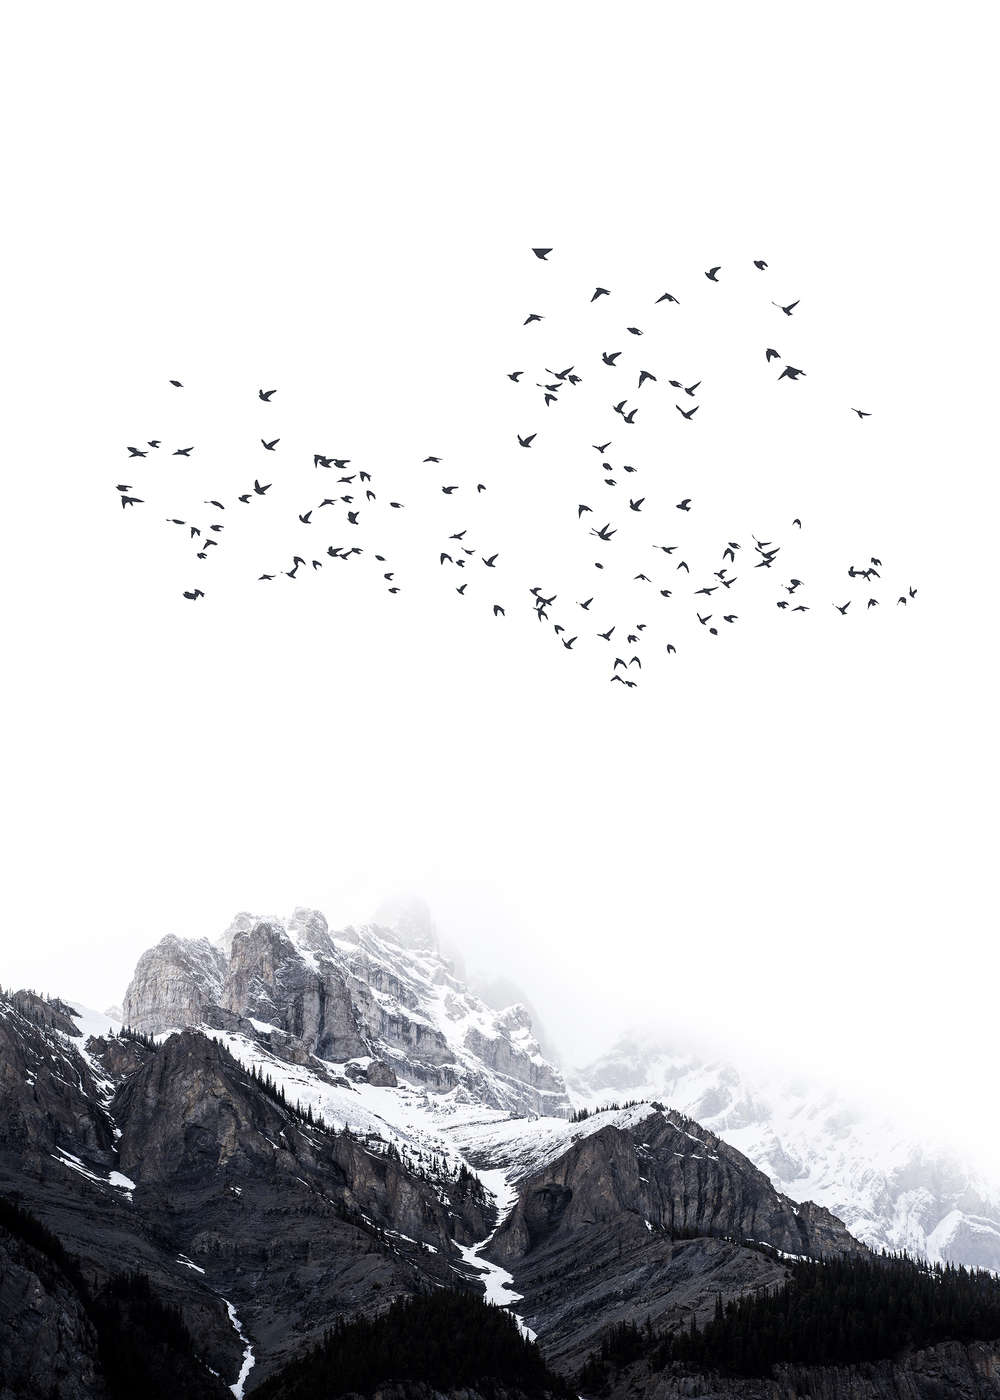             Papel pintado de paisaje Montañas nevadas y aves migratorias
        